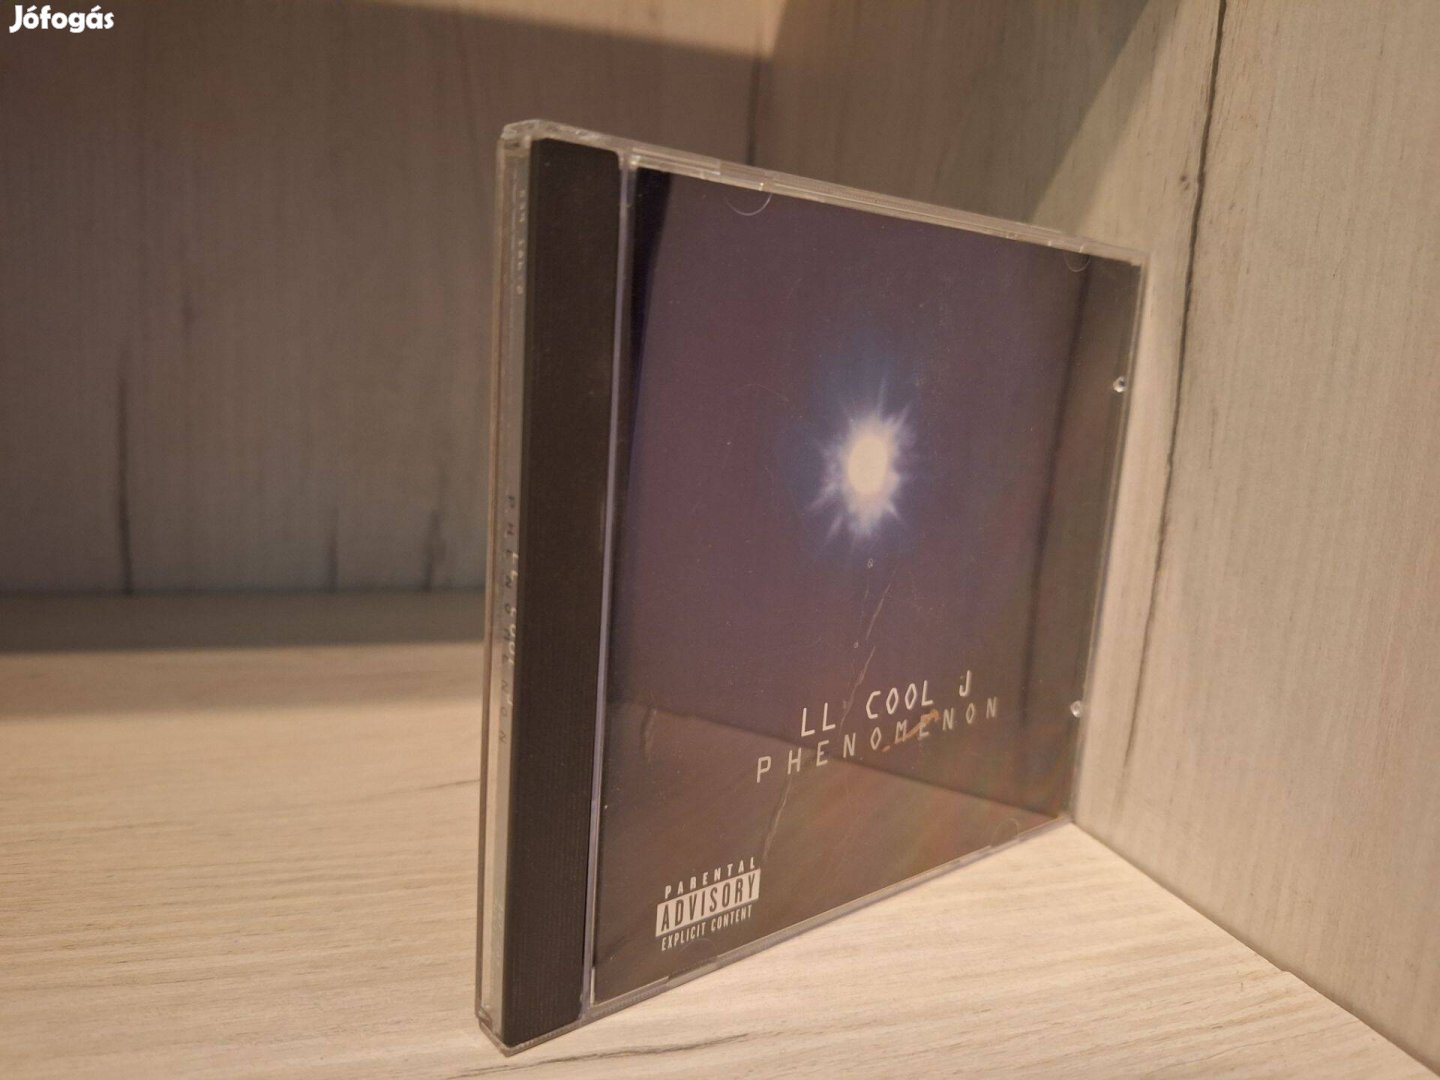 LL Cool J - Phenomenon CD